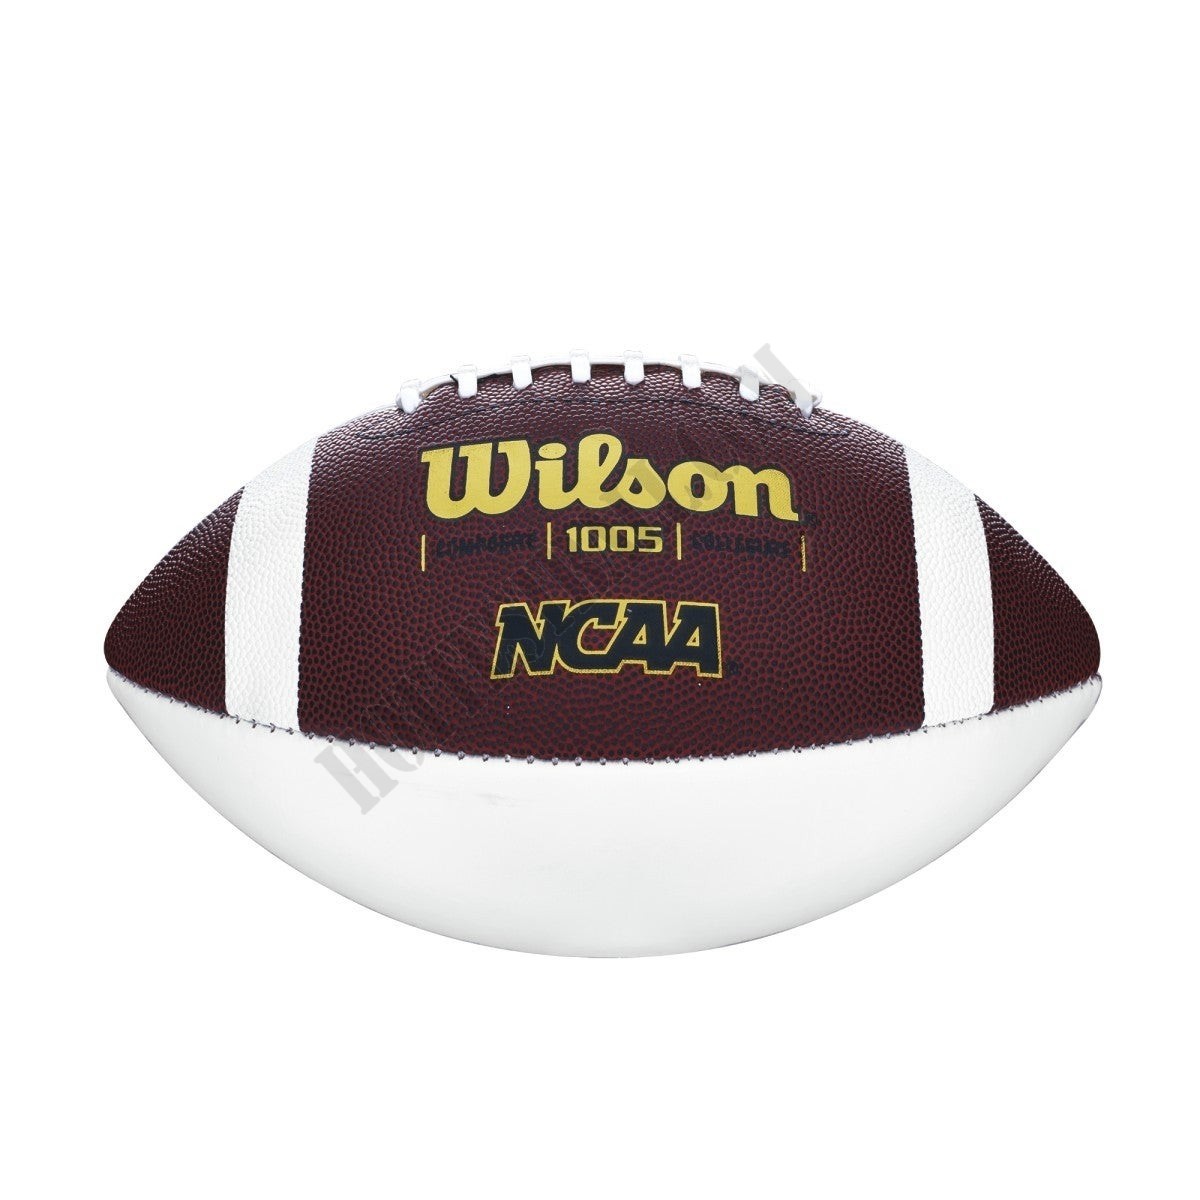 NCAA Autograph Composite Football - Official - Wilson Discount Store - NCAA Autograph Composite Football - Official - Wilson Discount Store